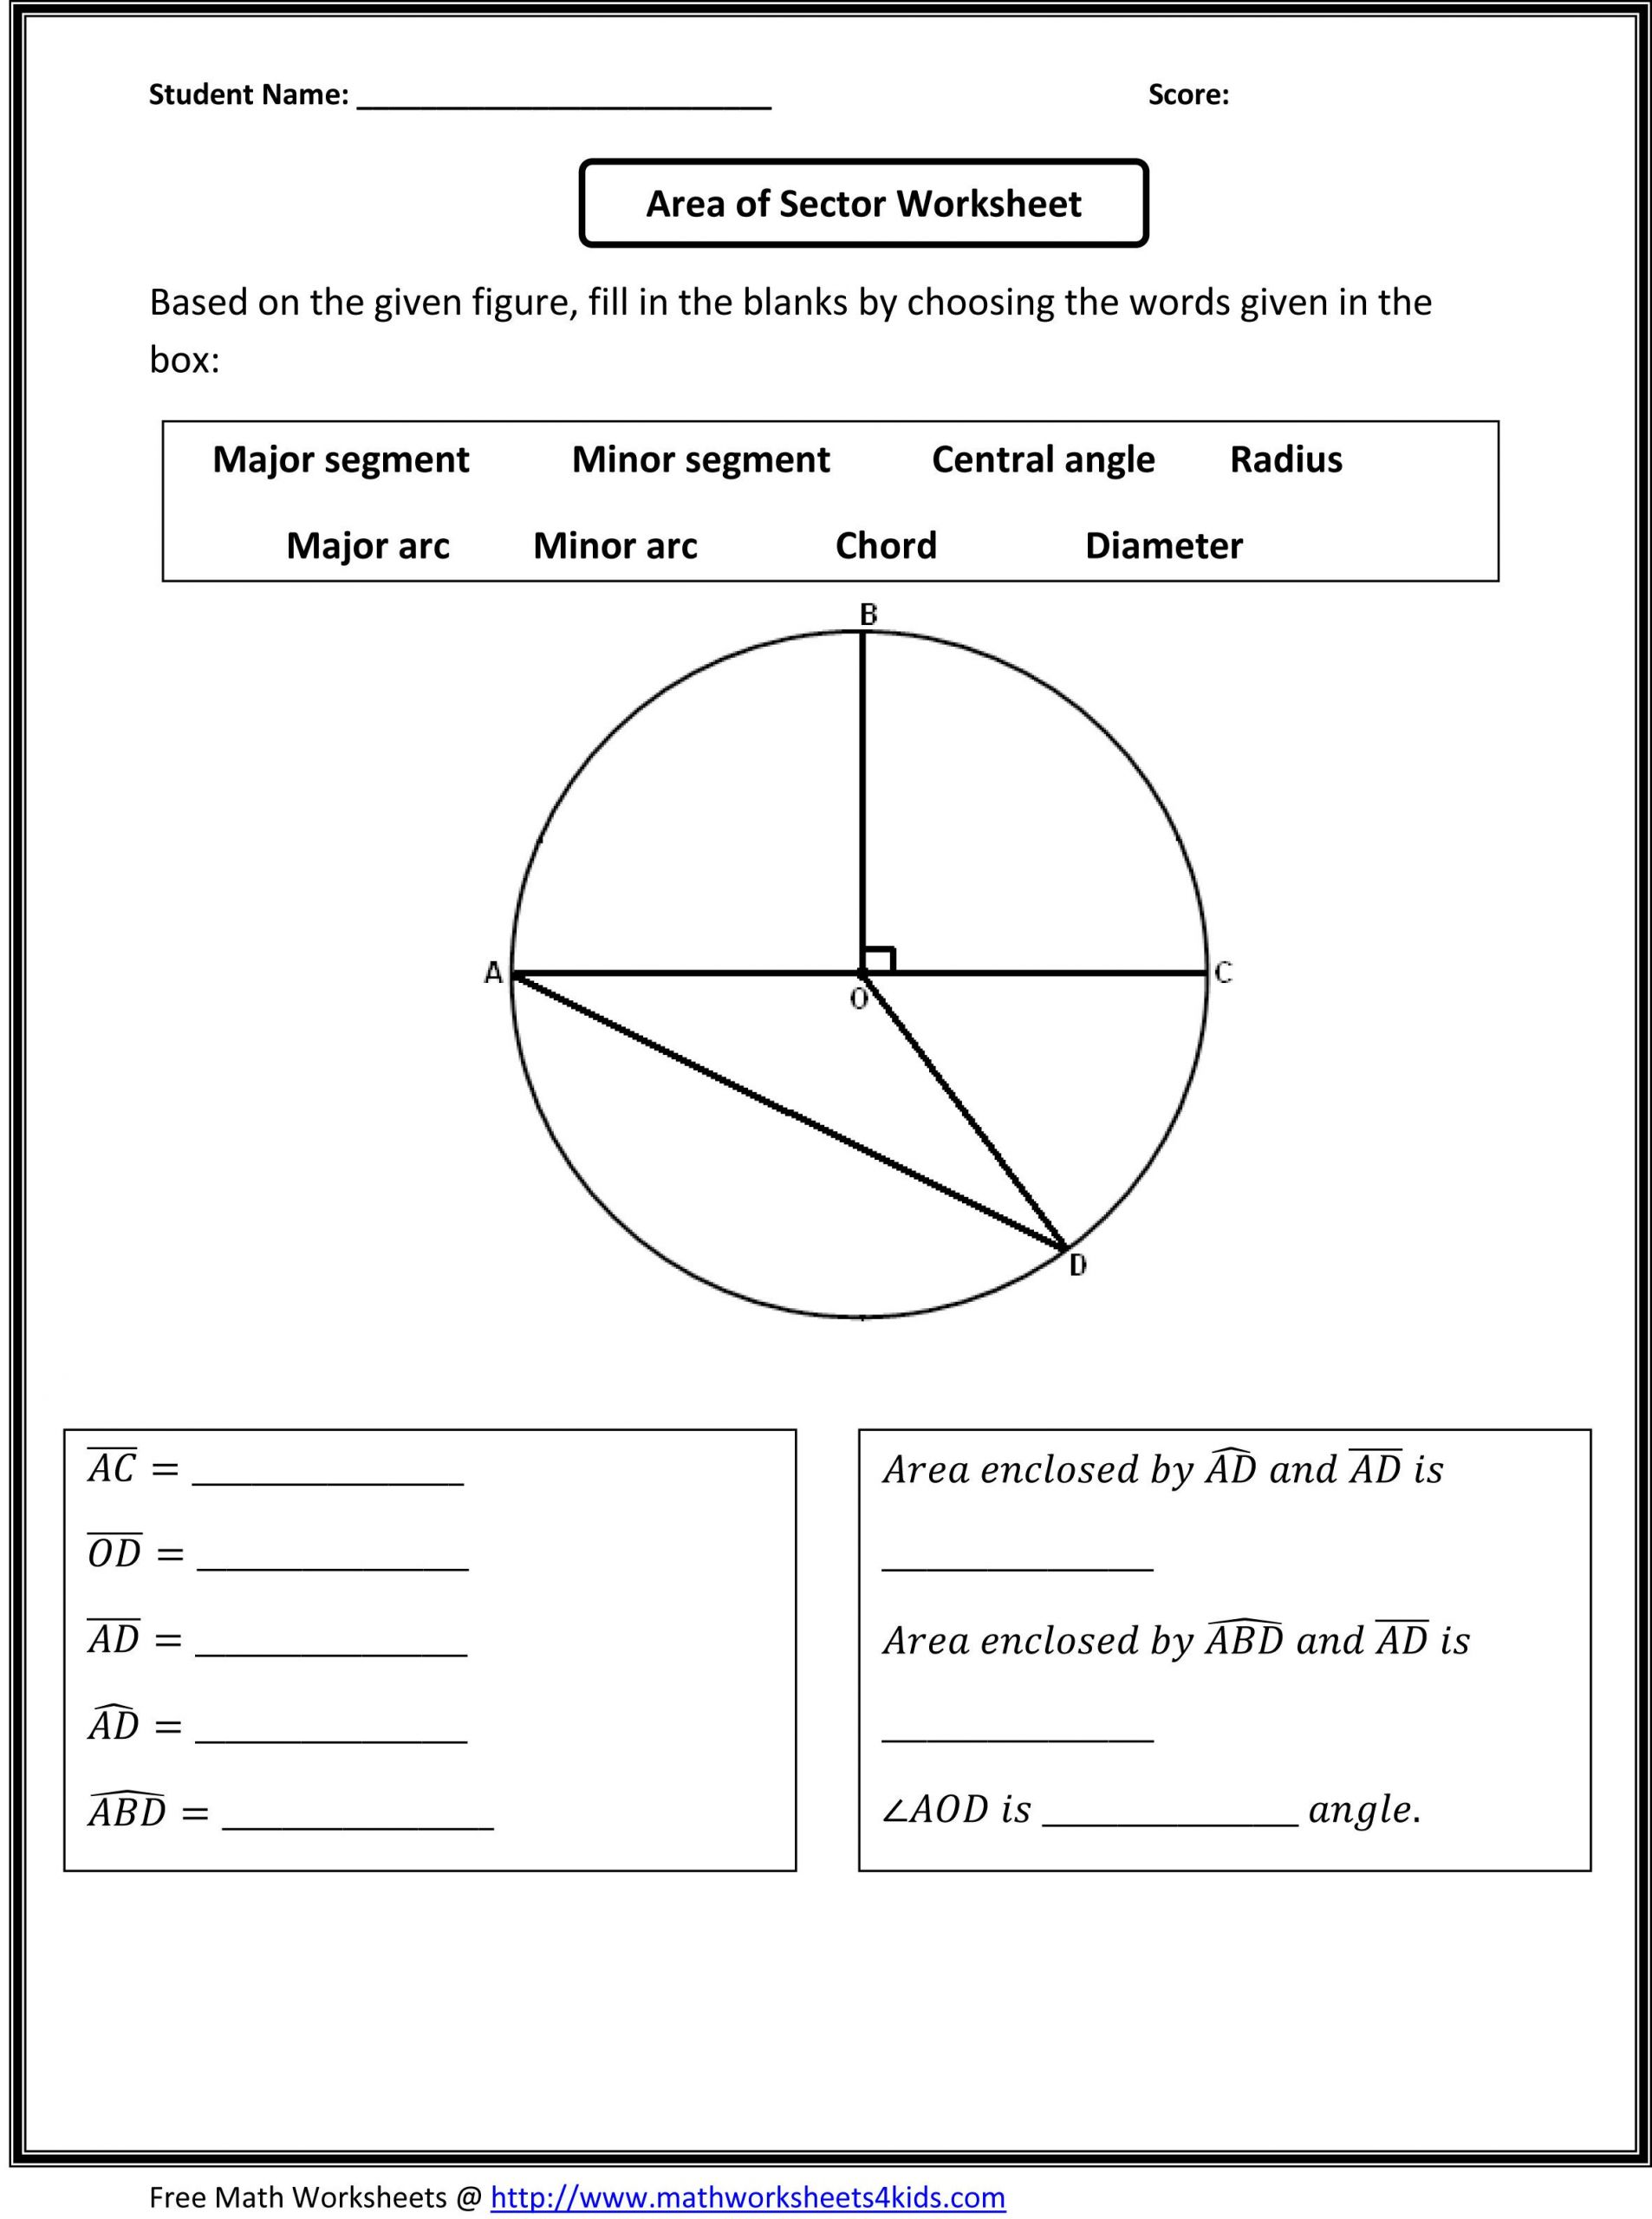 Free Math Worksheets Third Grade 3 Multiplication Multiply whole Hundreds